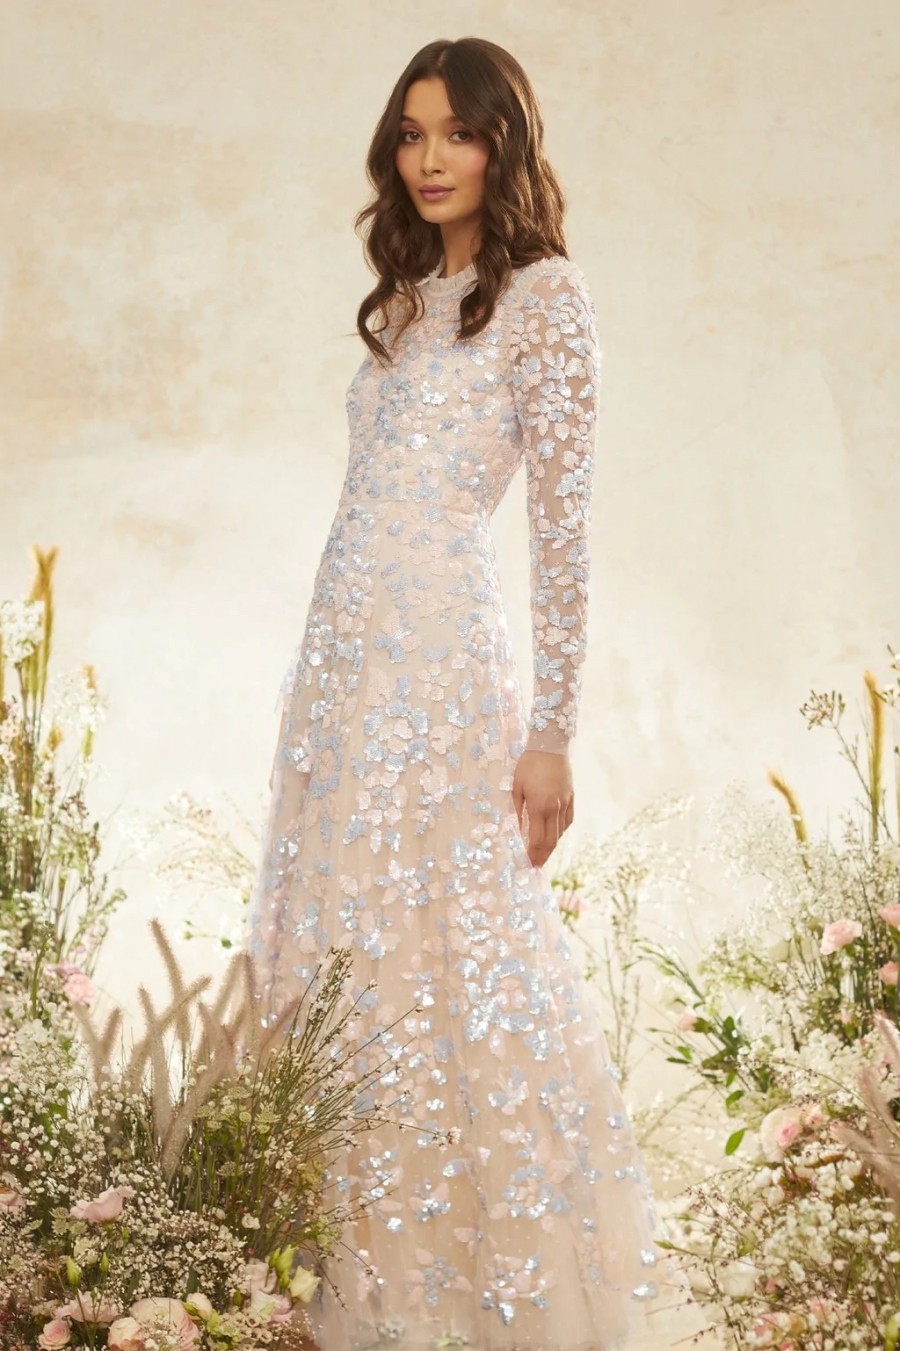 18 Surprising Blue Colored Wedding Dresses – Stillwhite Blog